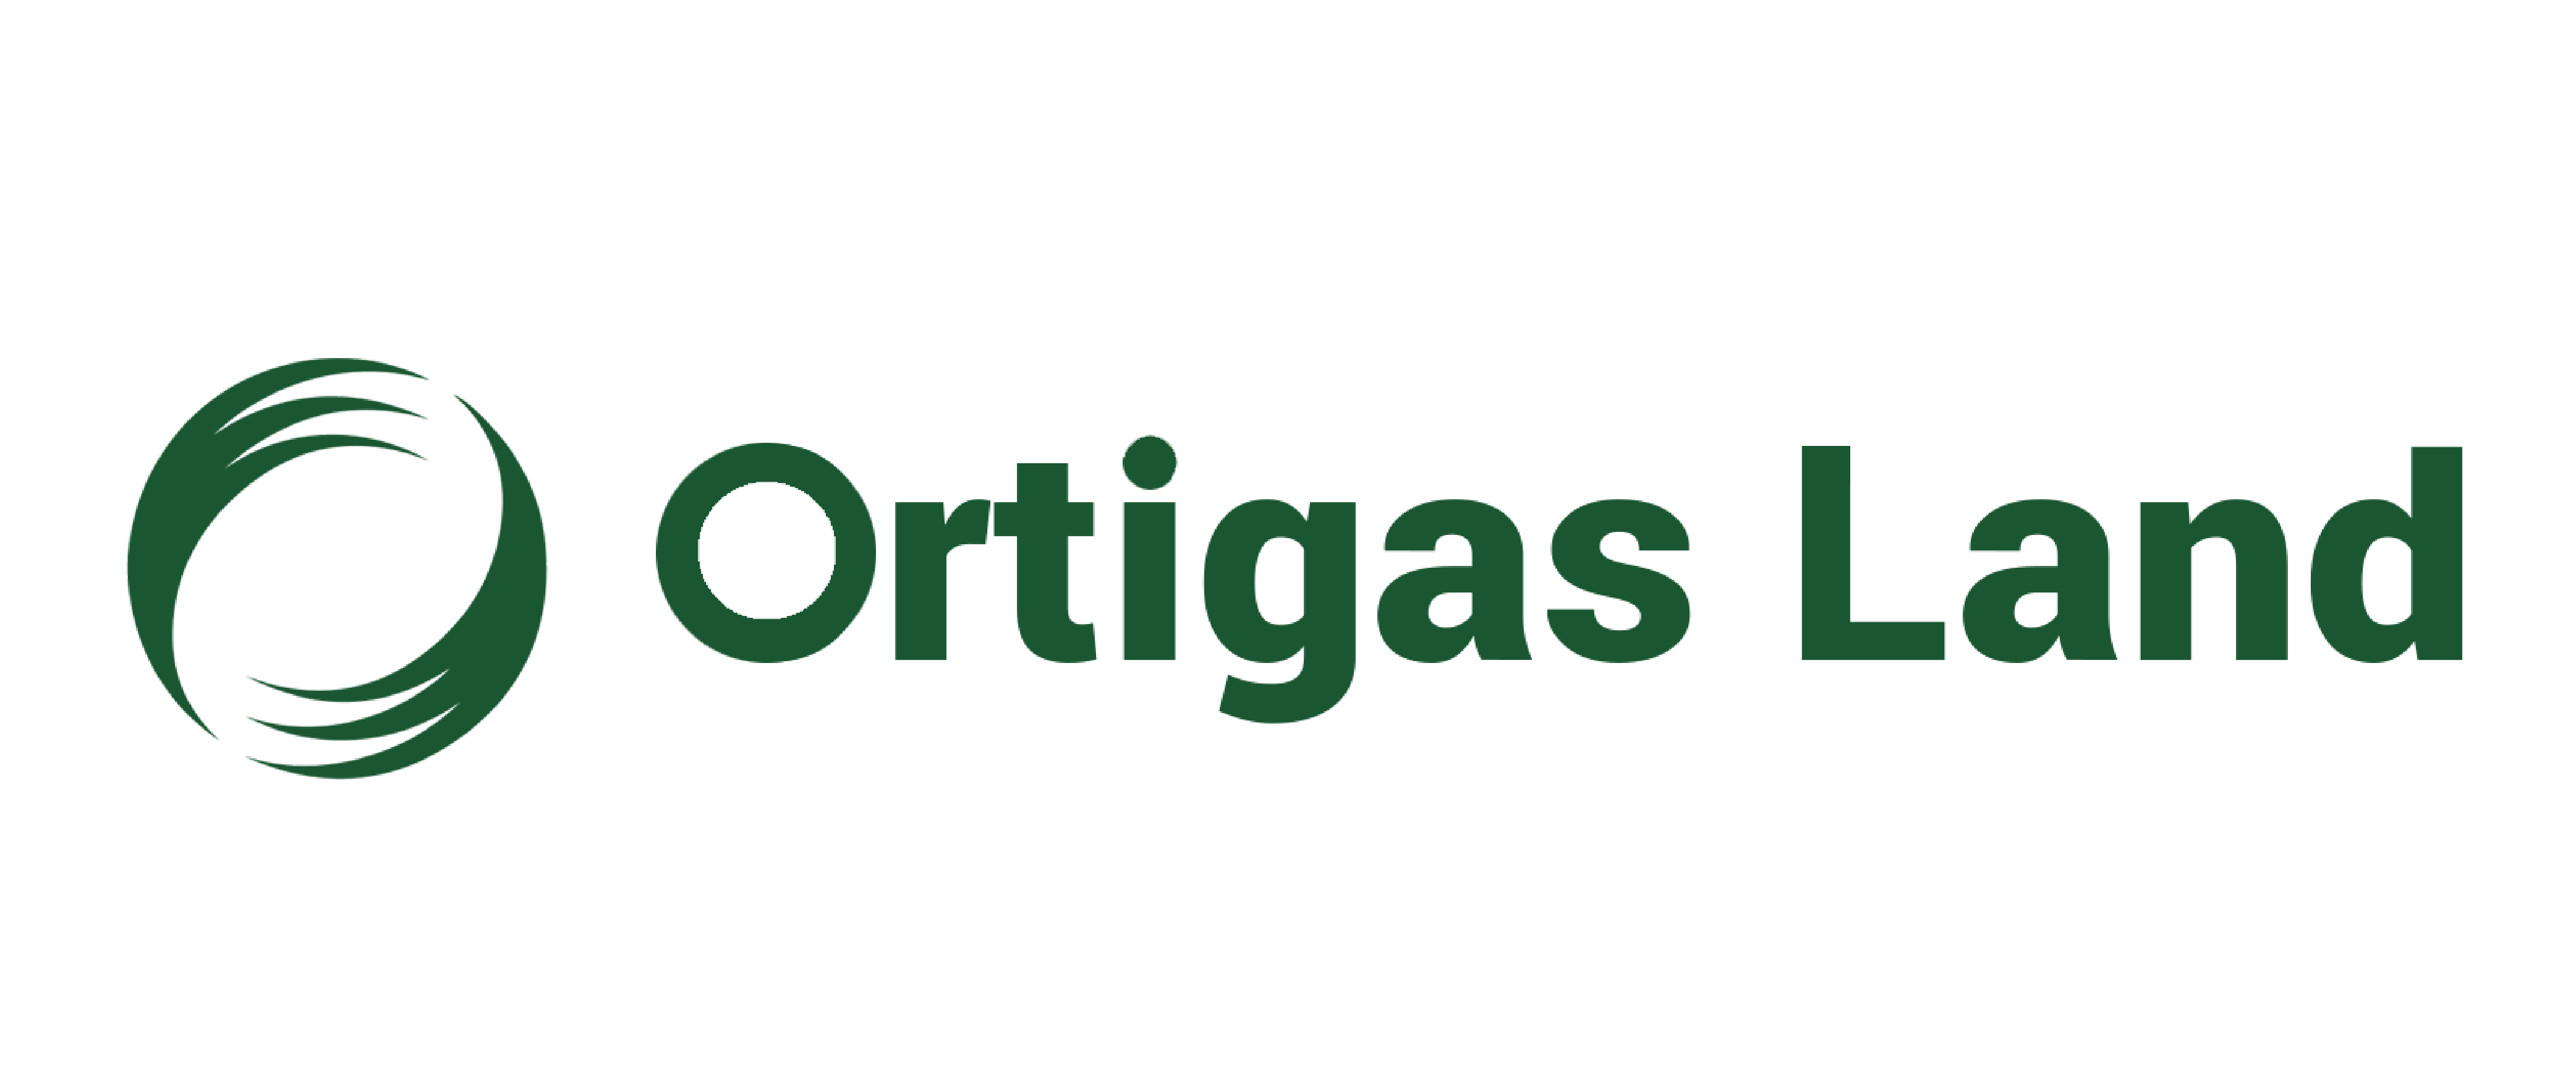 Ortigas & Company Ltd.Partnership